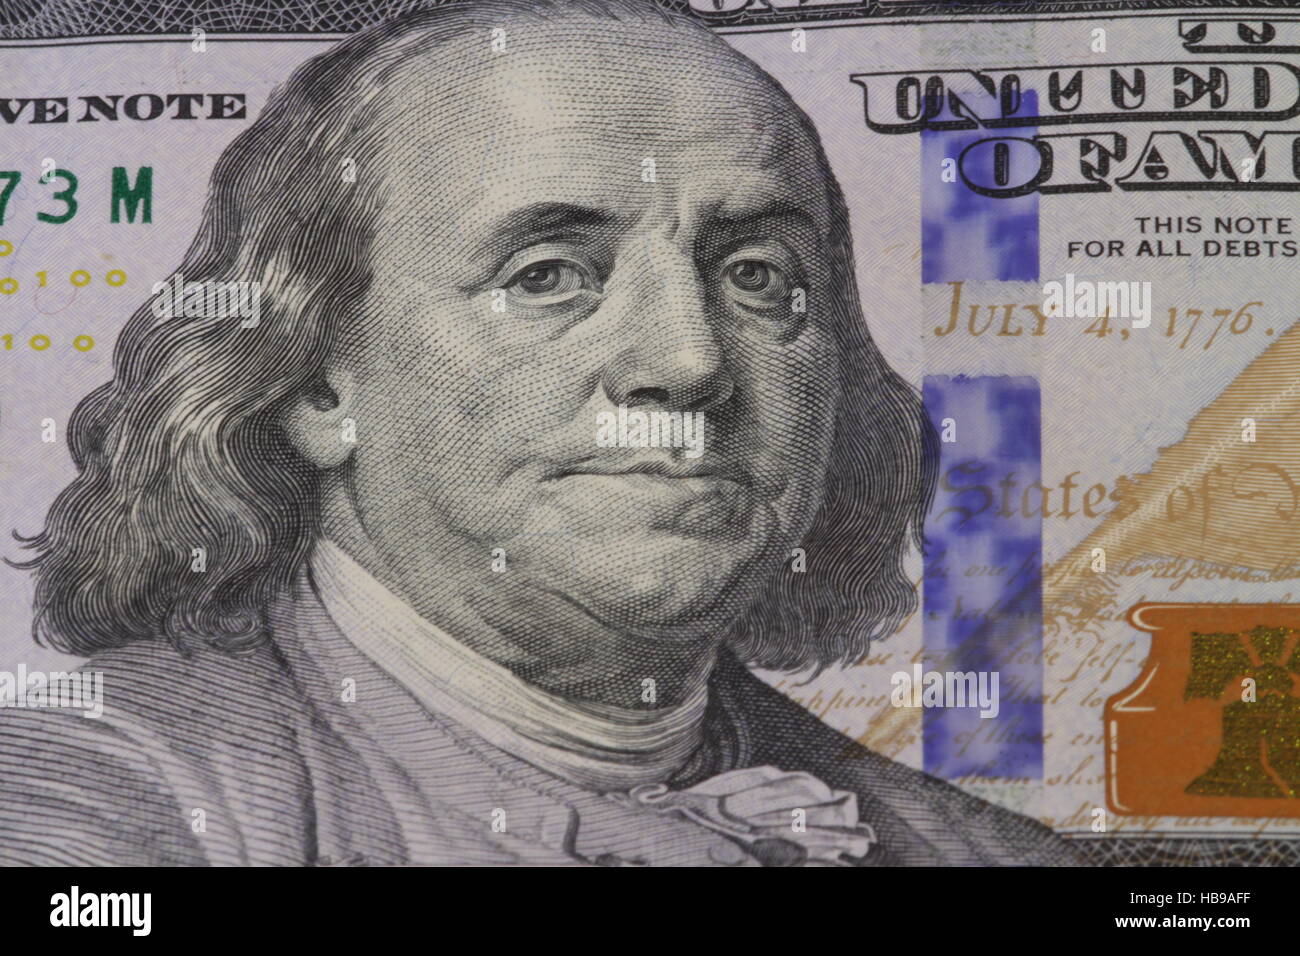 Franklin portrait on banknote Stock Photo